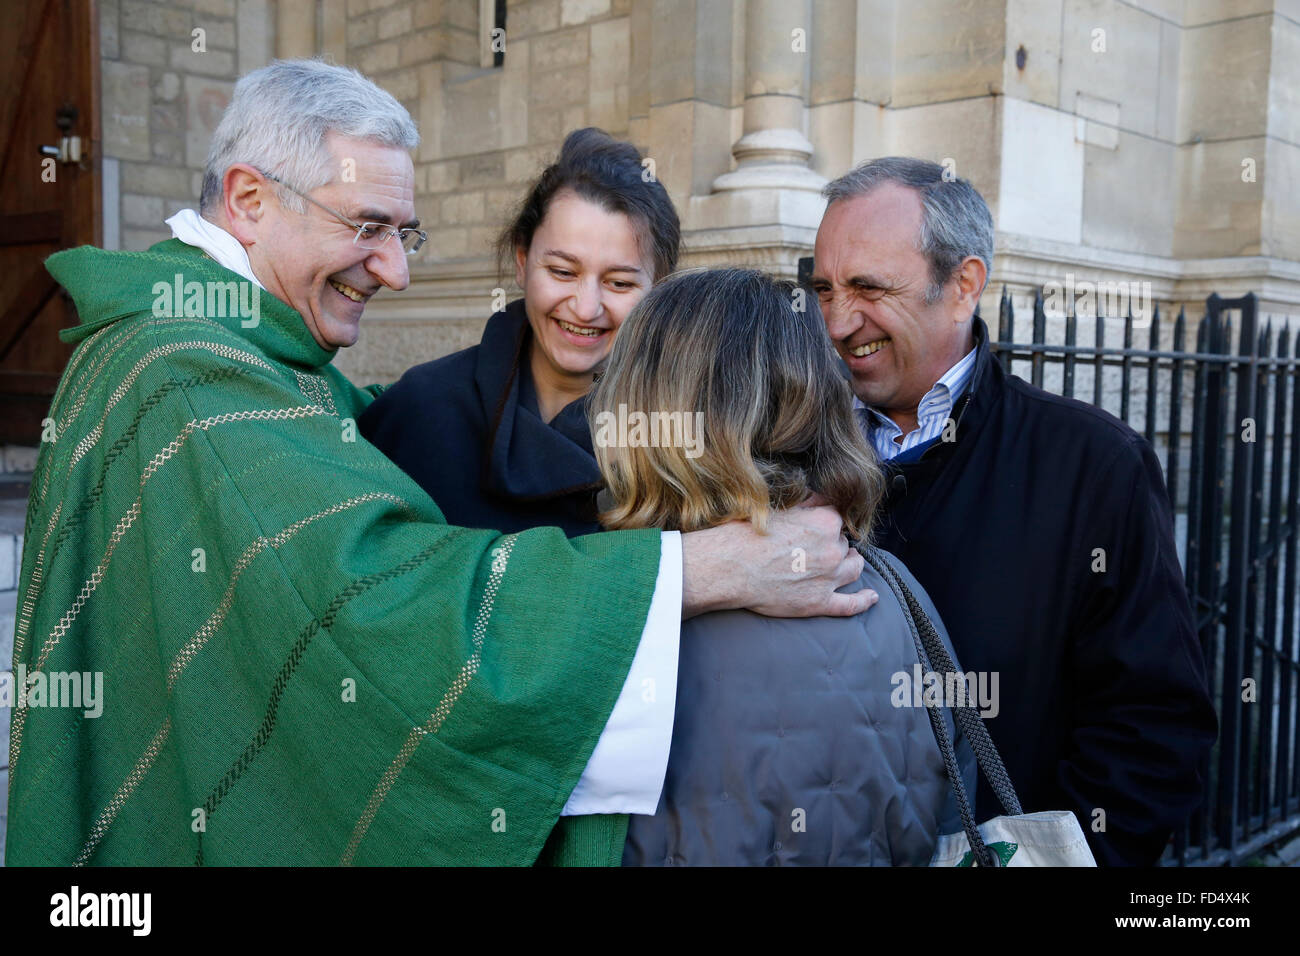 Catholic priest greeting parishioners after Mass Stock Photo